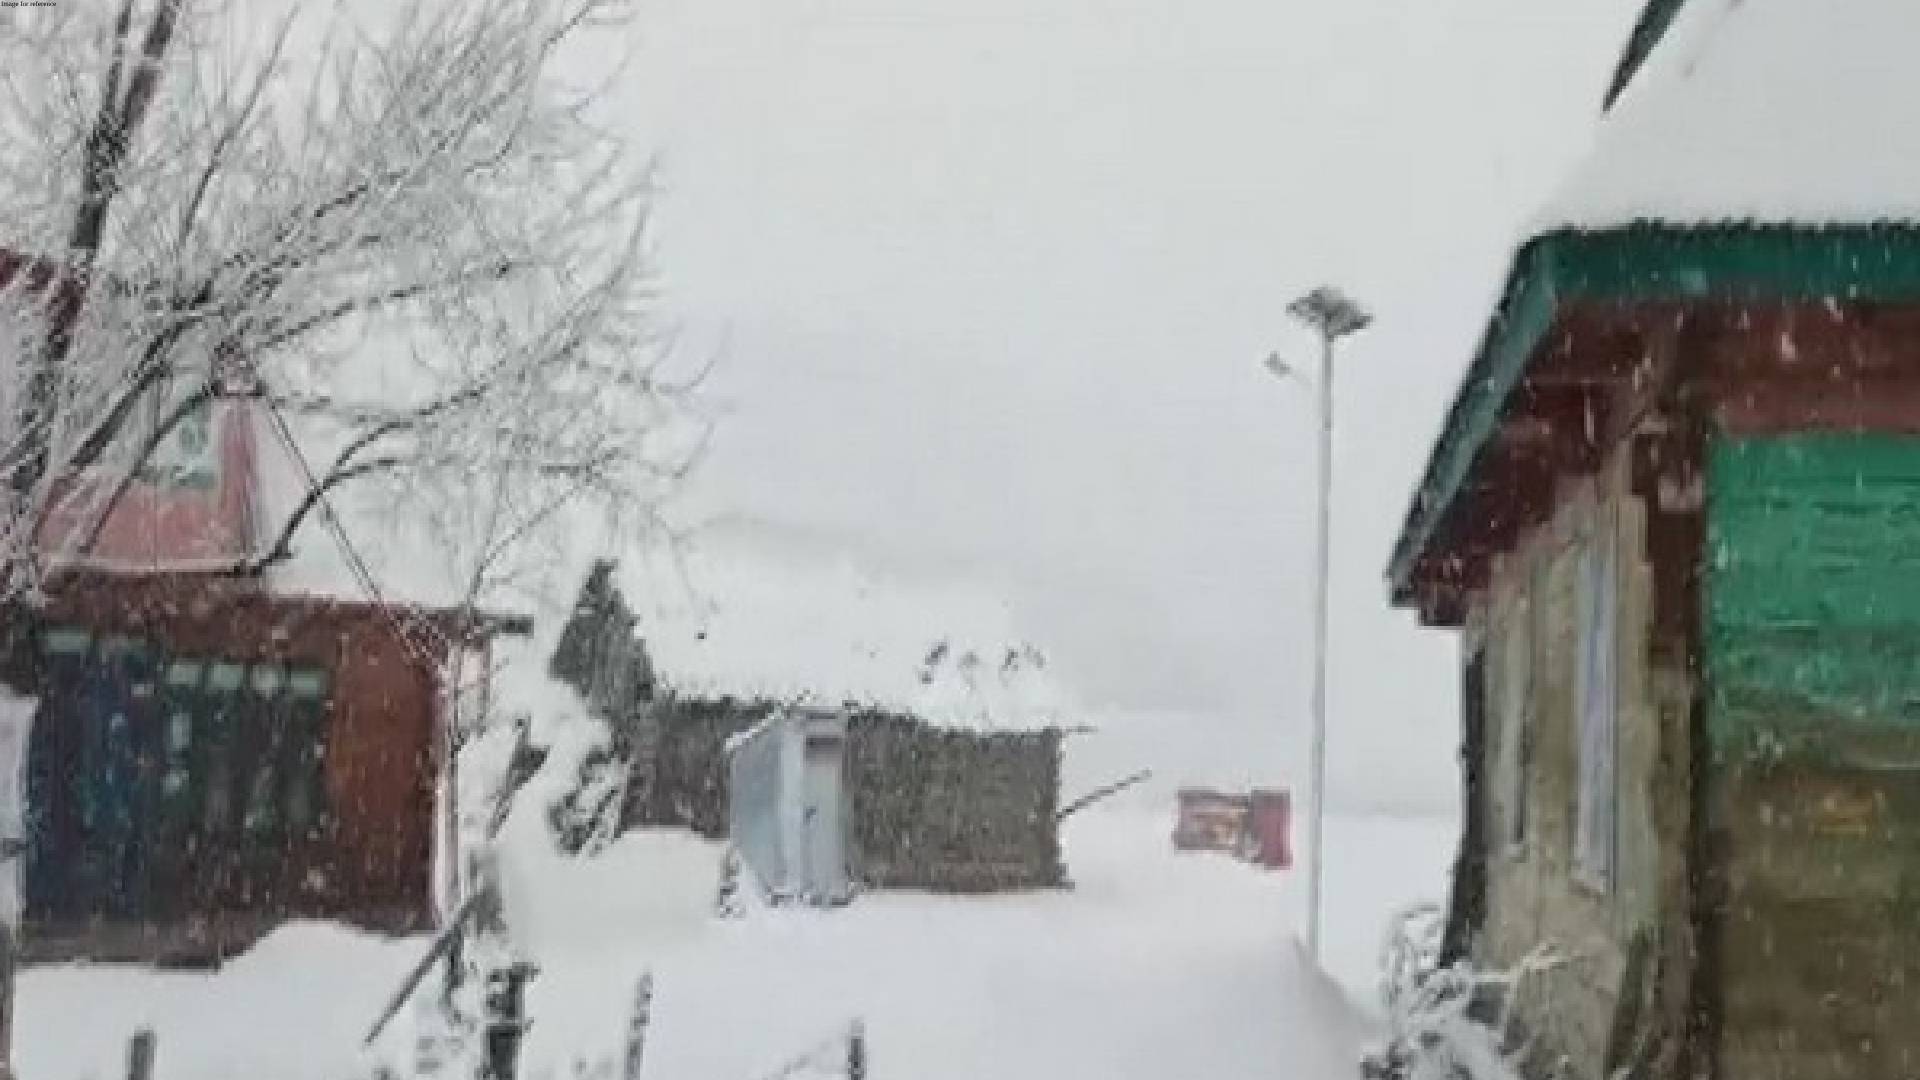 J-K: Upper reaches of Gurez valley receive fresh snowfall